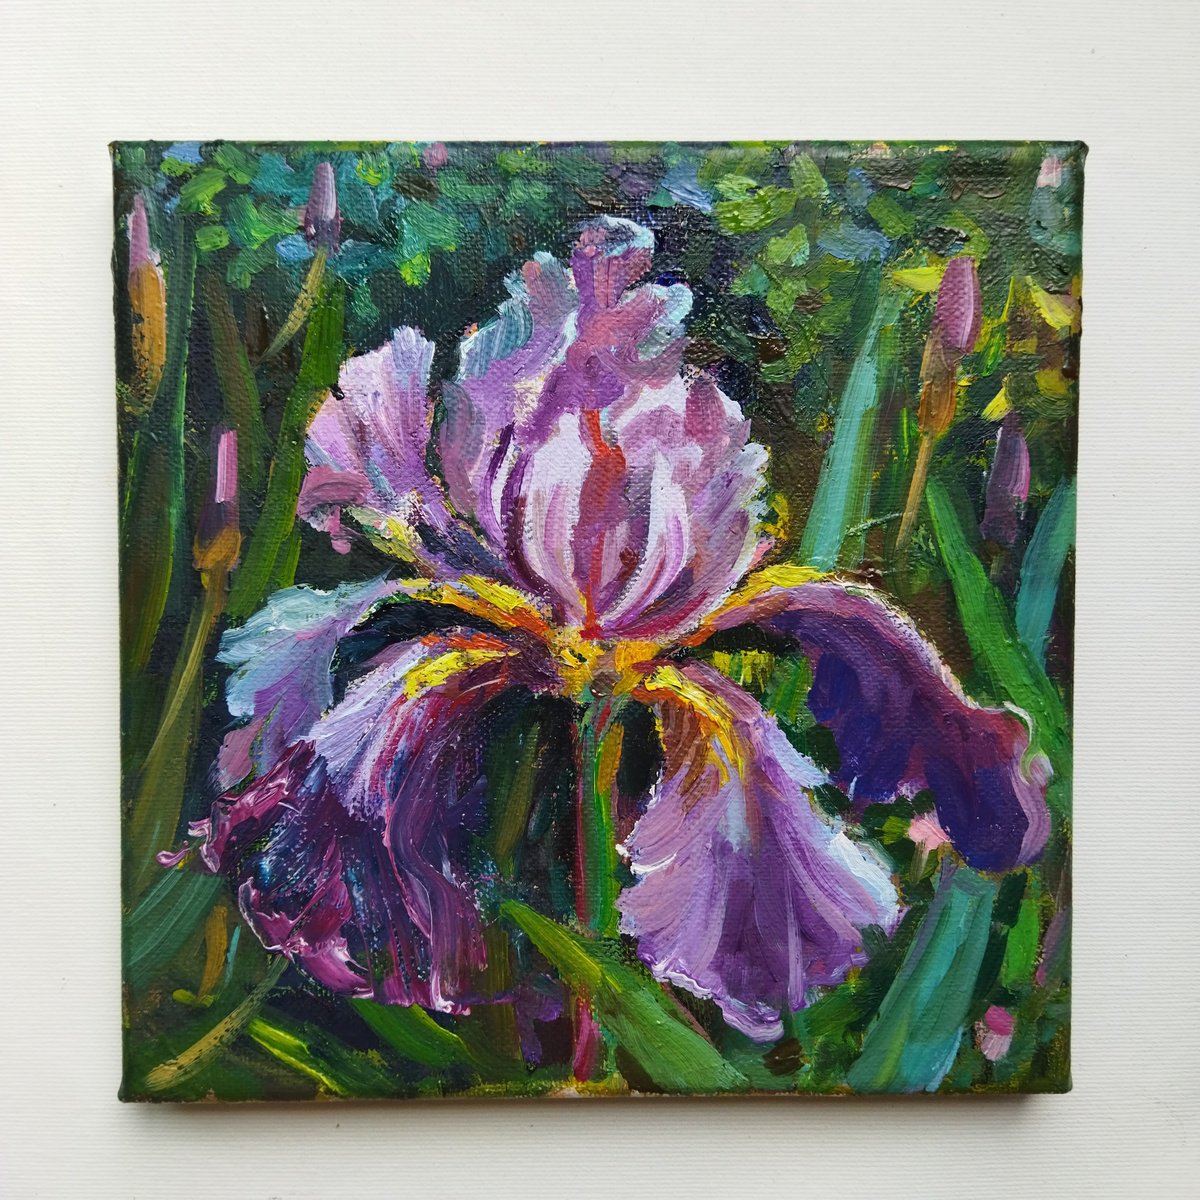 Iris flower by Ann Krasikova